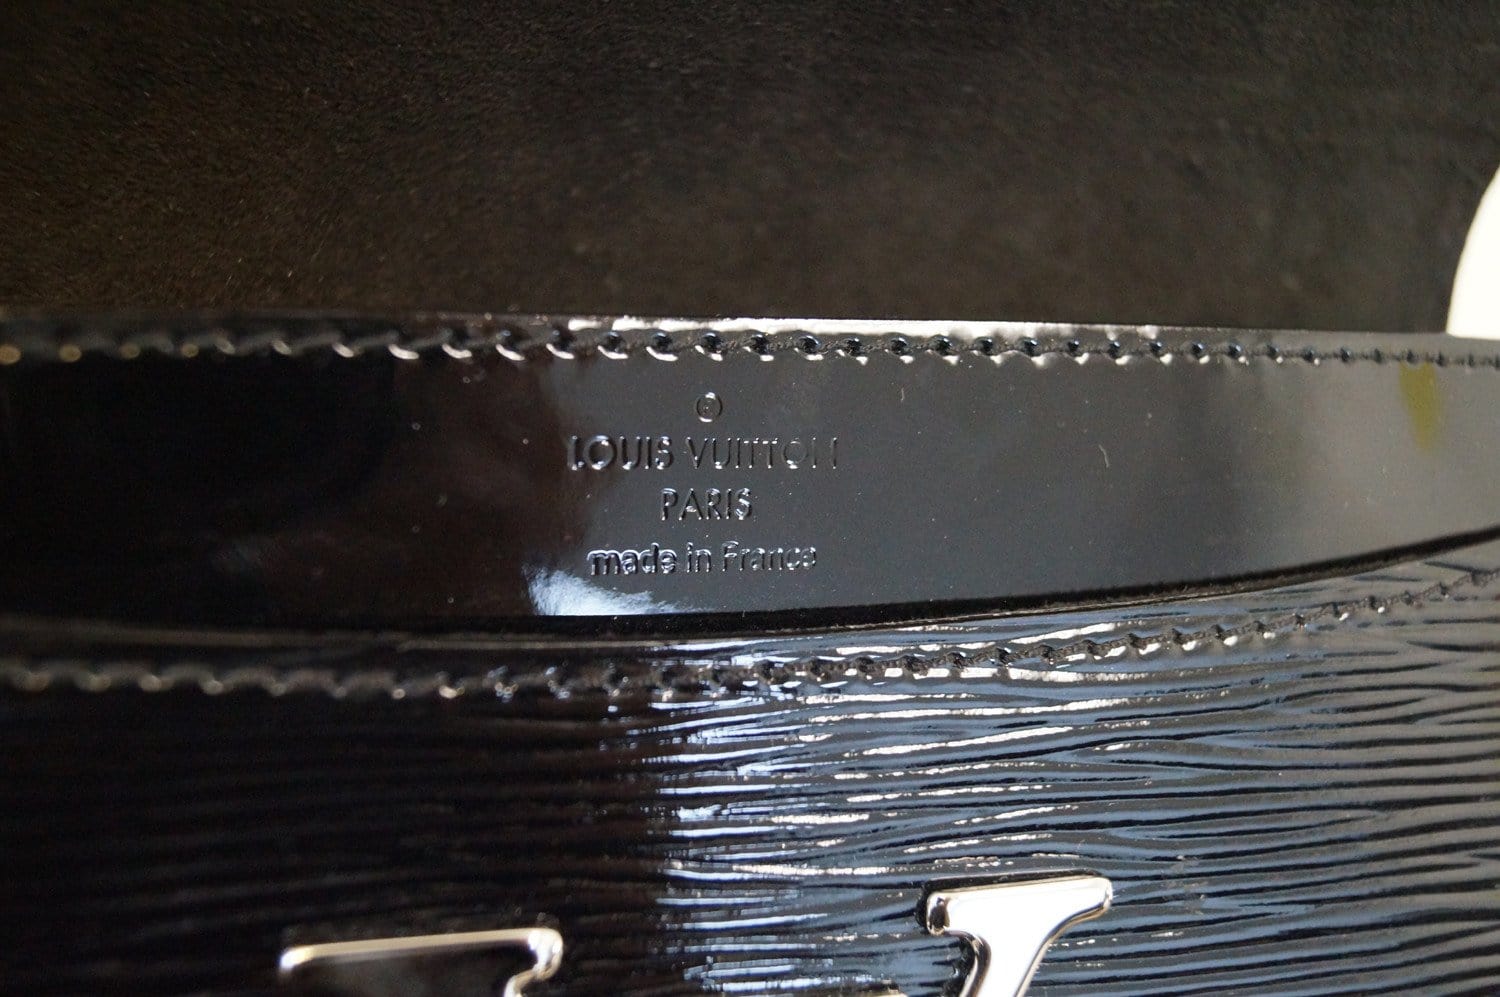 Louis Vuitton Black Electric Epi Leather Sevigne GM Bag Louis